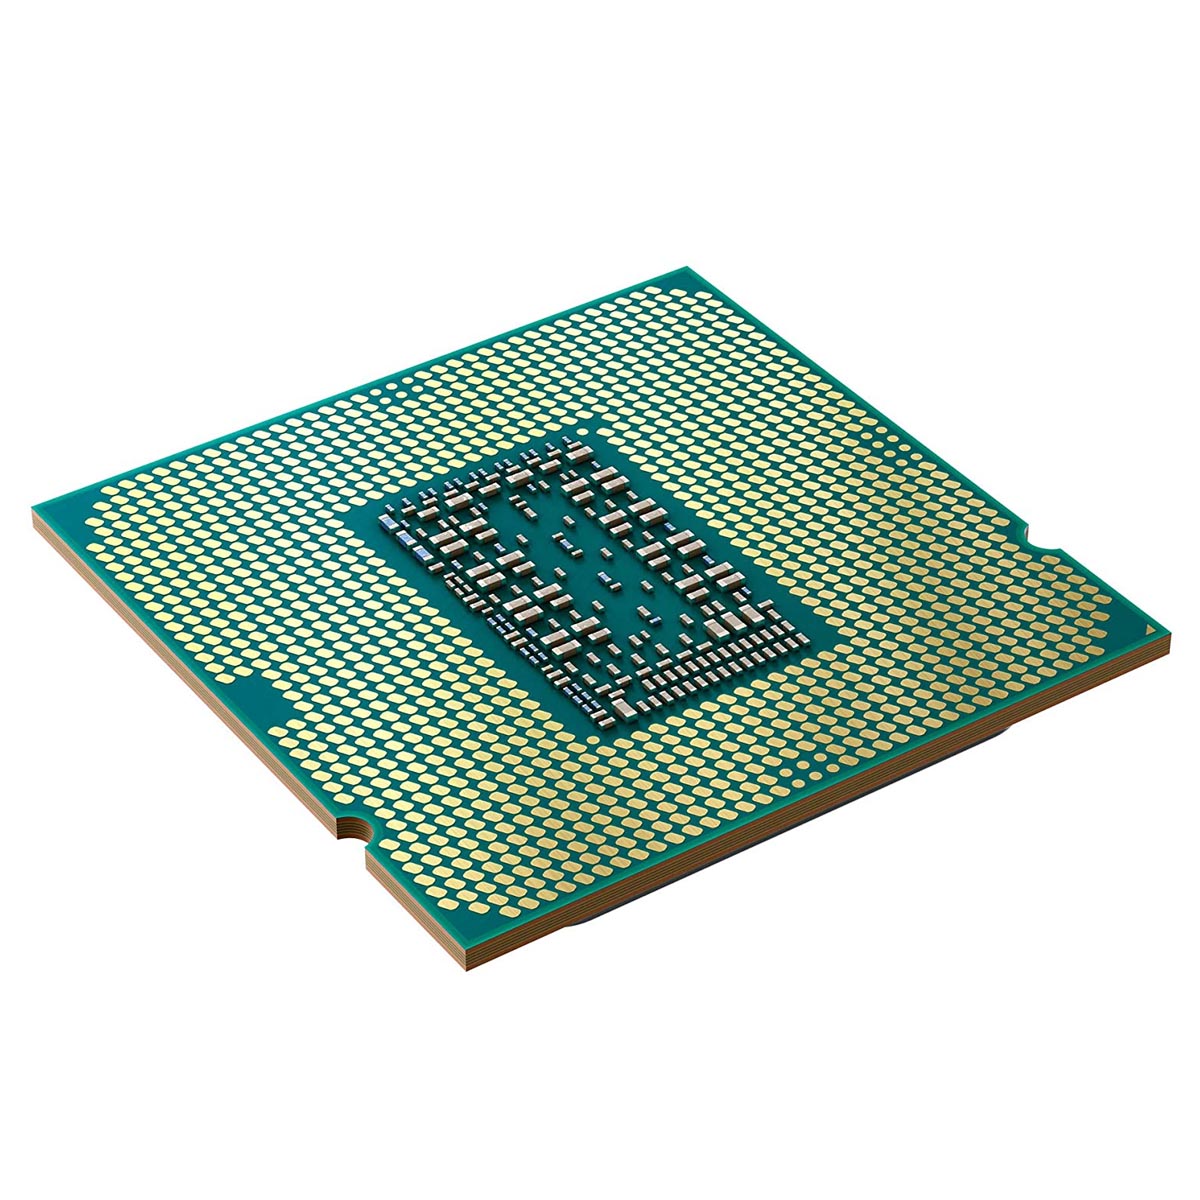 Intel Core 11th Gen i9-11900 LGA1200 डेस्कटॉप प्रोसेसर 8 कोर 5.2GHz तक 16MB कैशे